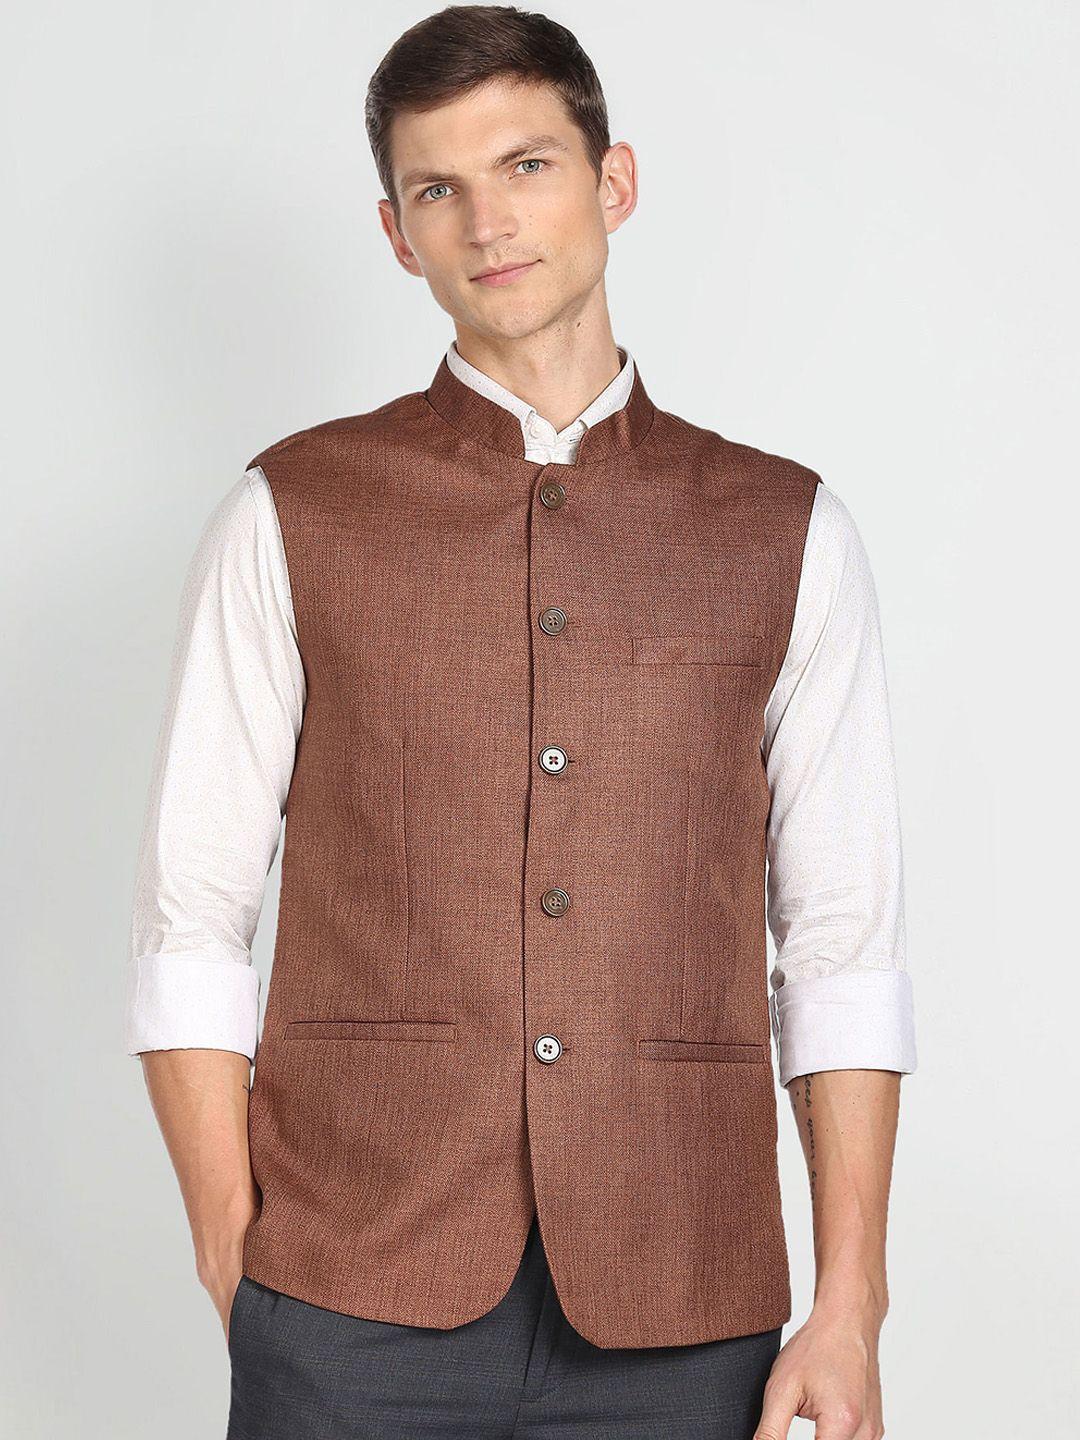 arrow-mandarin-collar-heathered-nehru-jacket